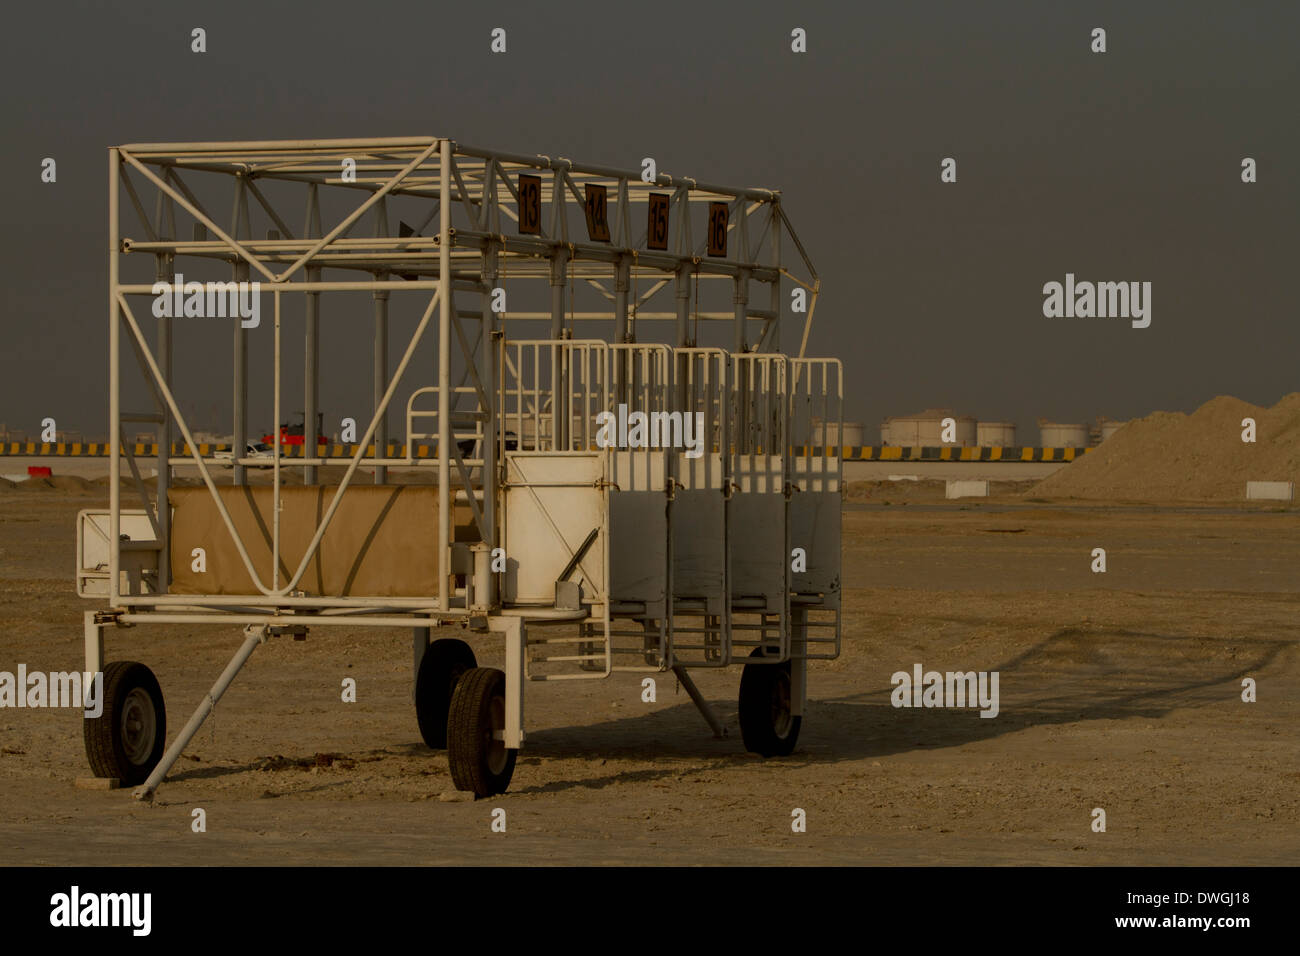 Qatar horse racing  Starting gate box in Desert sun Stock Photo